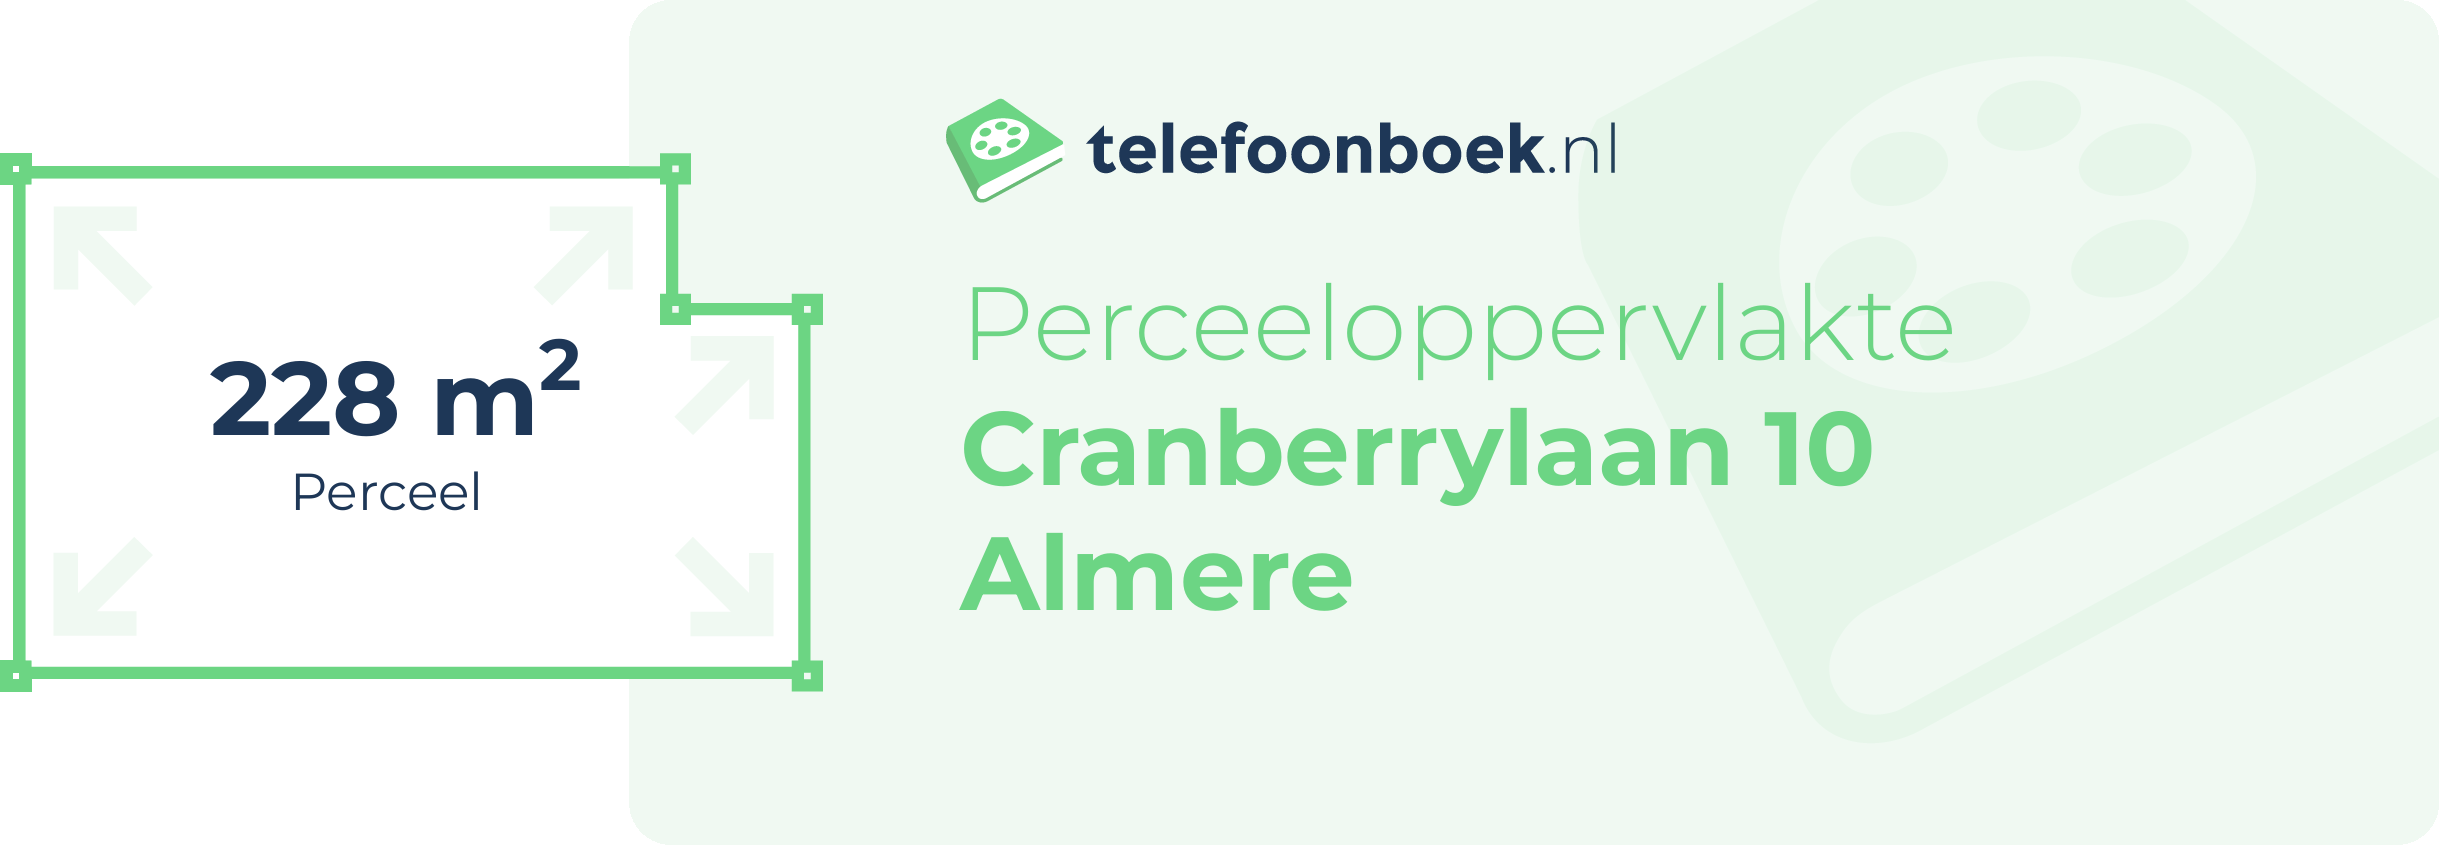 Perceeloppervlakte Cranberrylaan 10 Almere